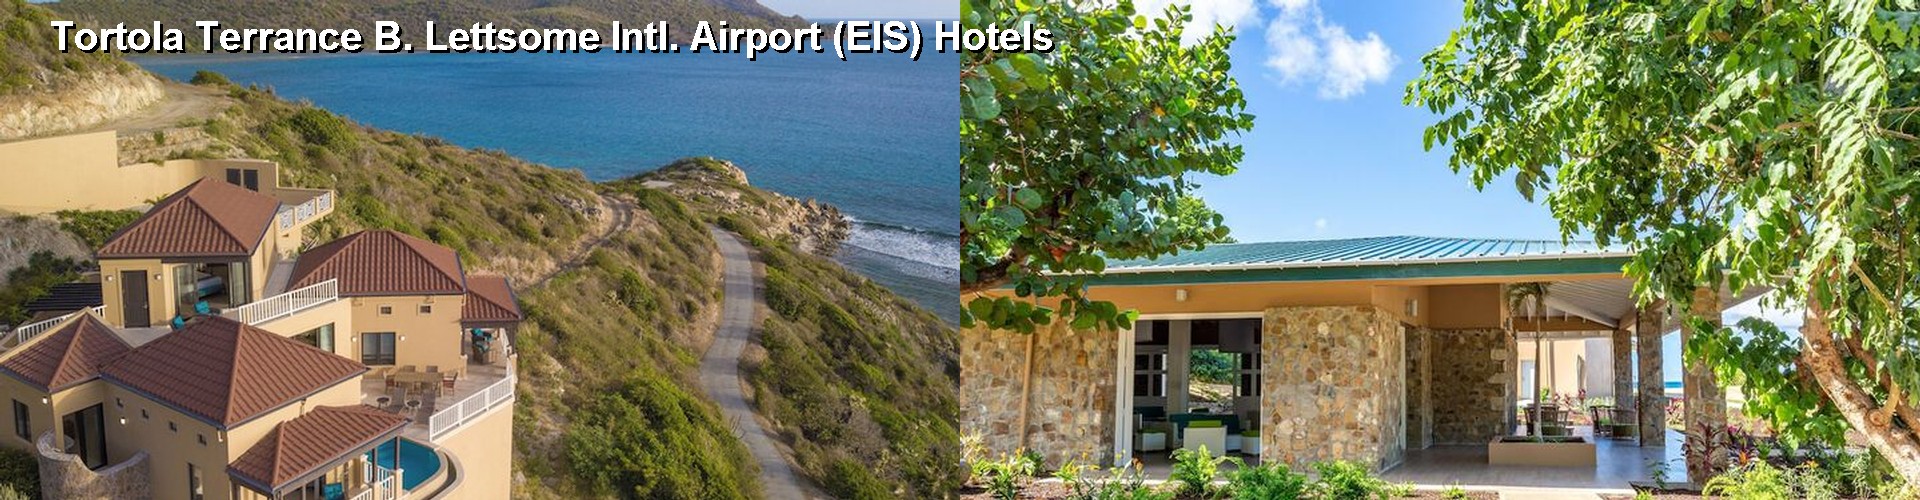 5 Best Hotels near Tortola Terrance B. Lettsome Intl. Airport (EIS)